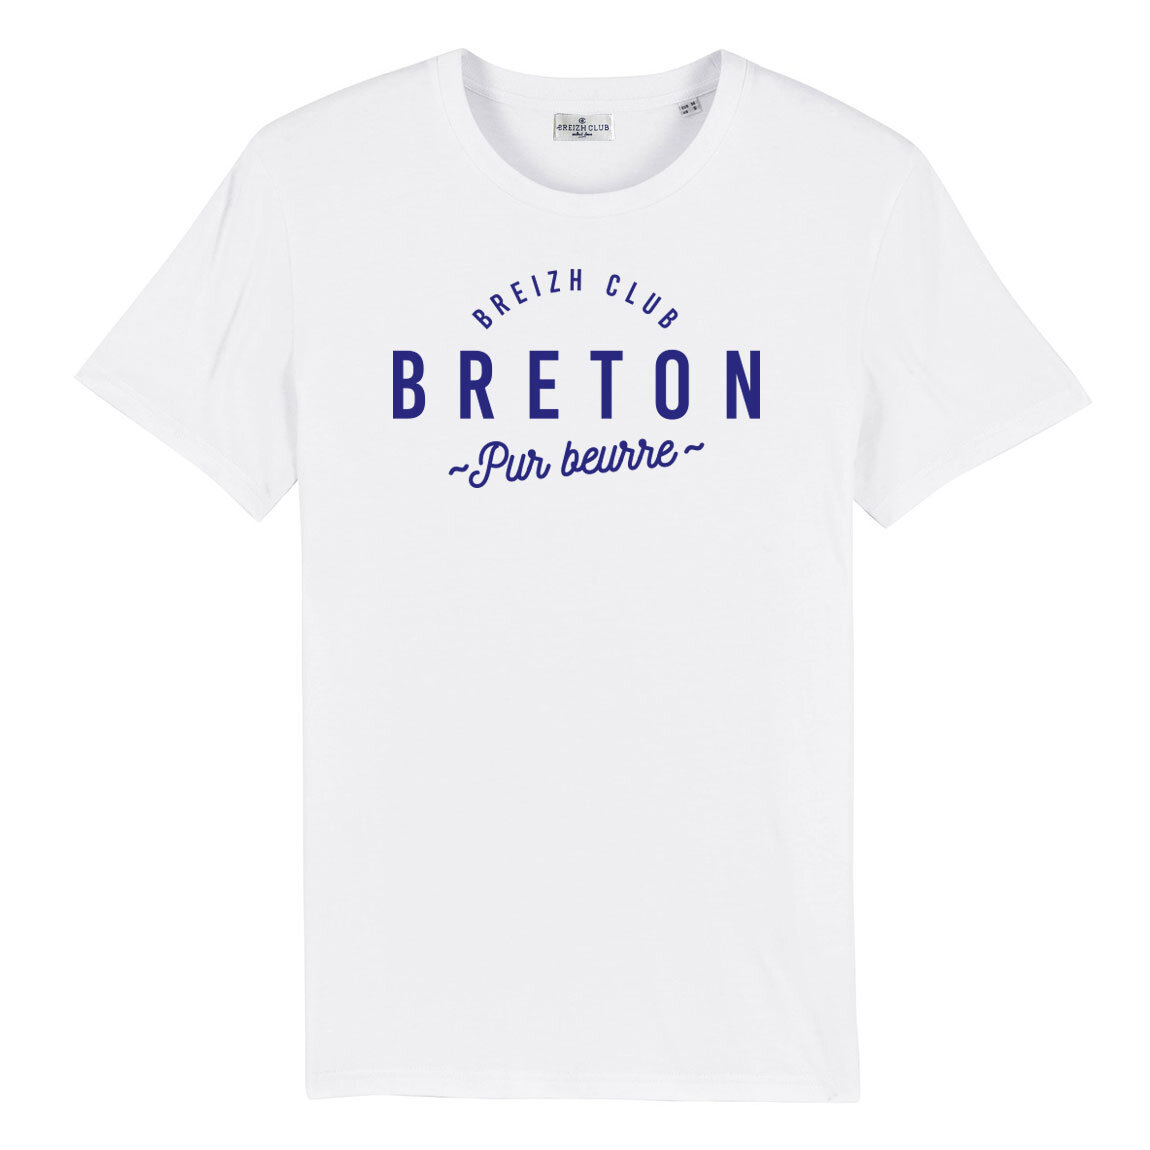 tee shirt breton homme